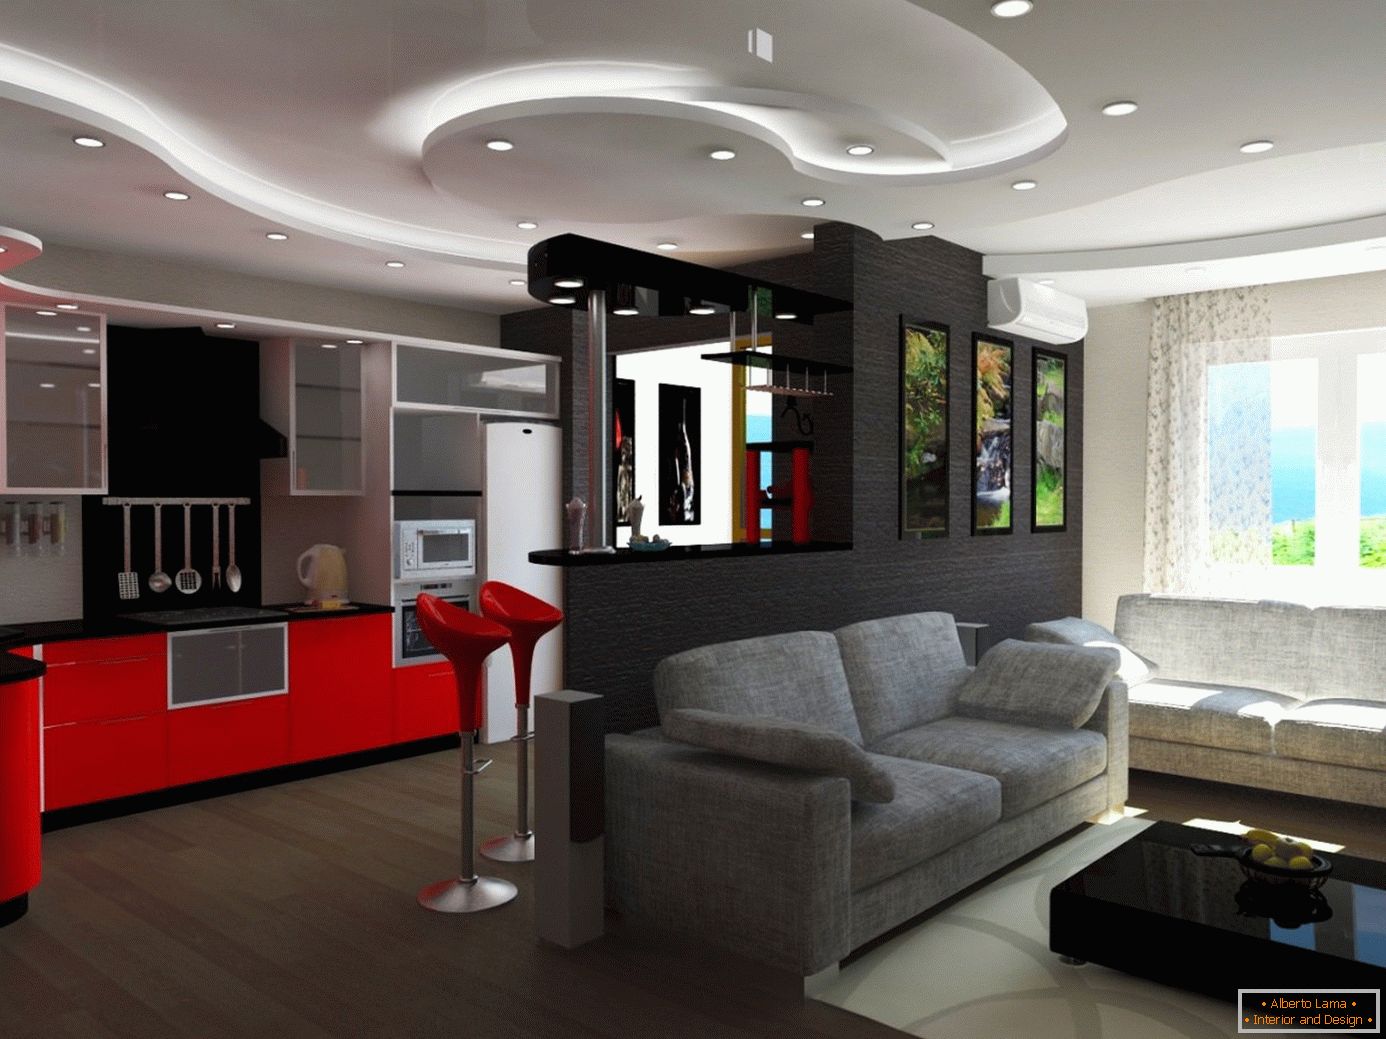 Design kitchen studio with a multi-level ceiling